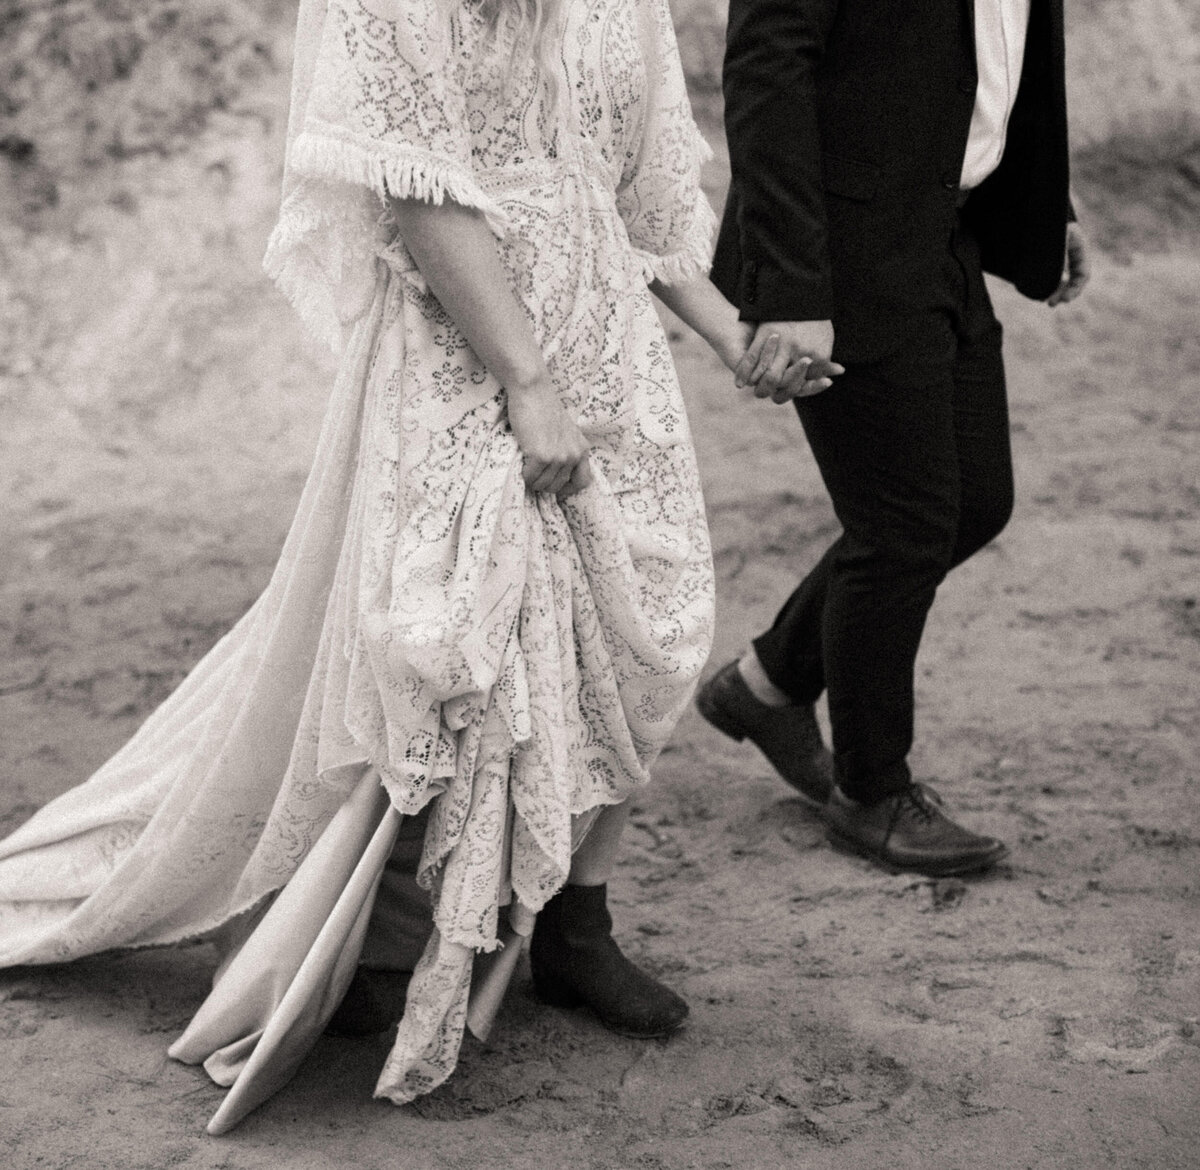 Bride holding up het vintage wedding dress as she walks holding hands with her groom